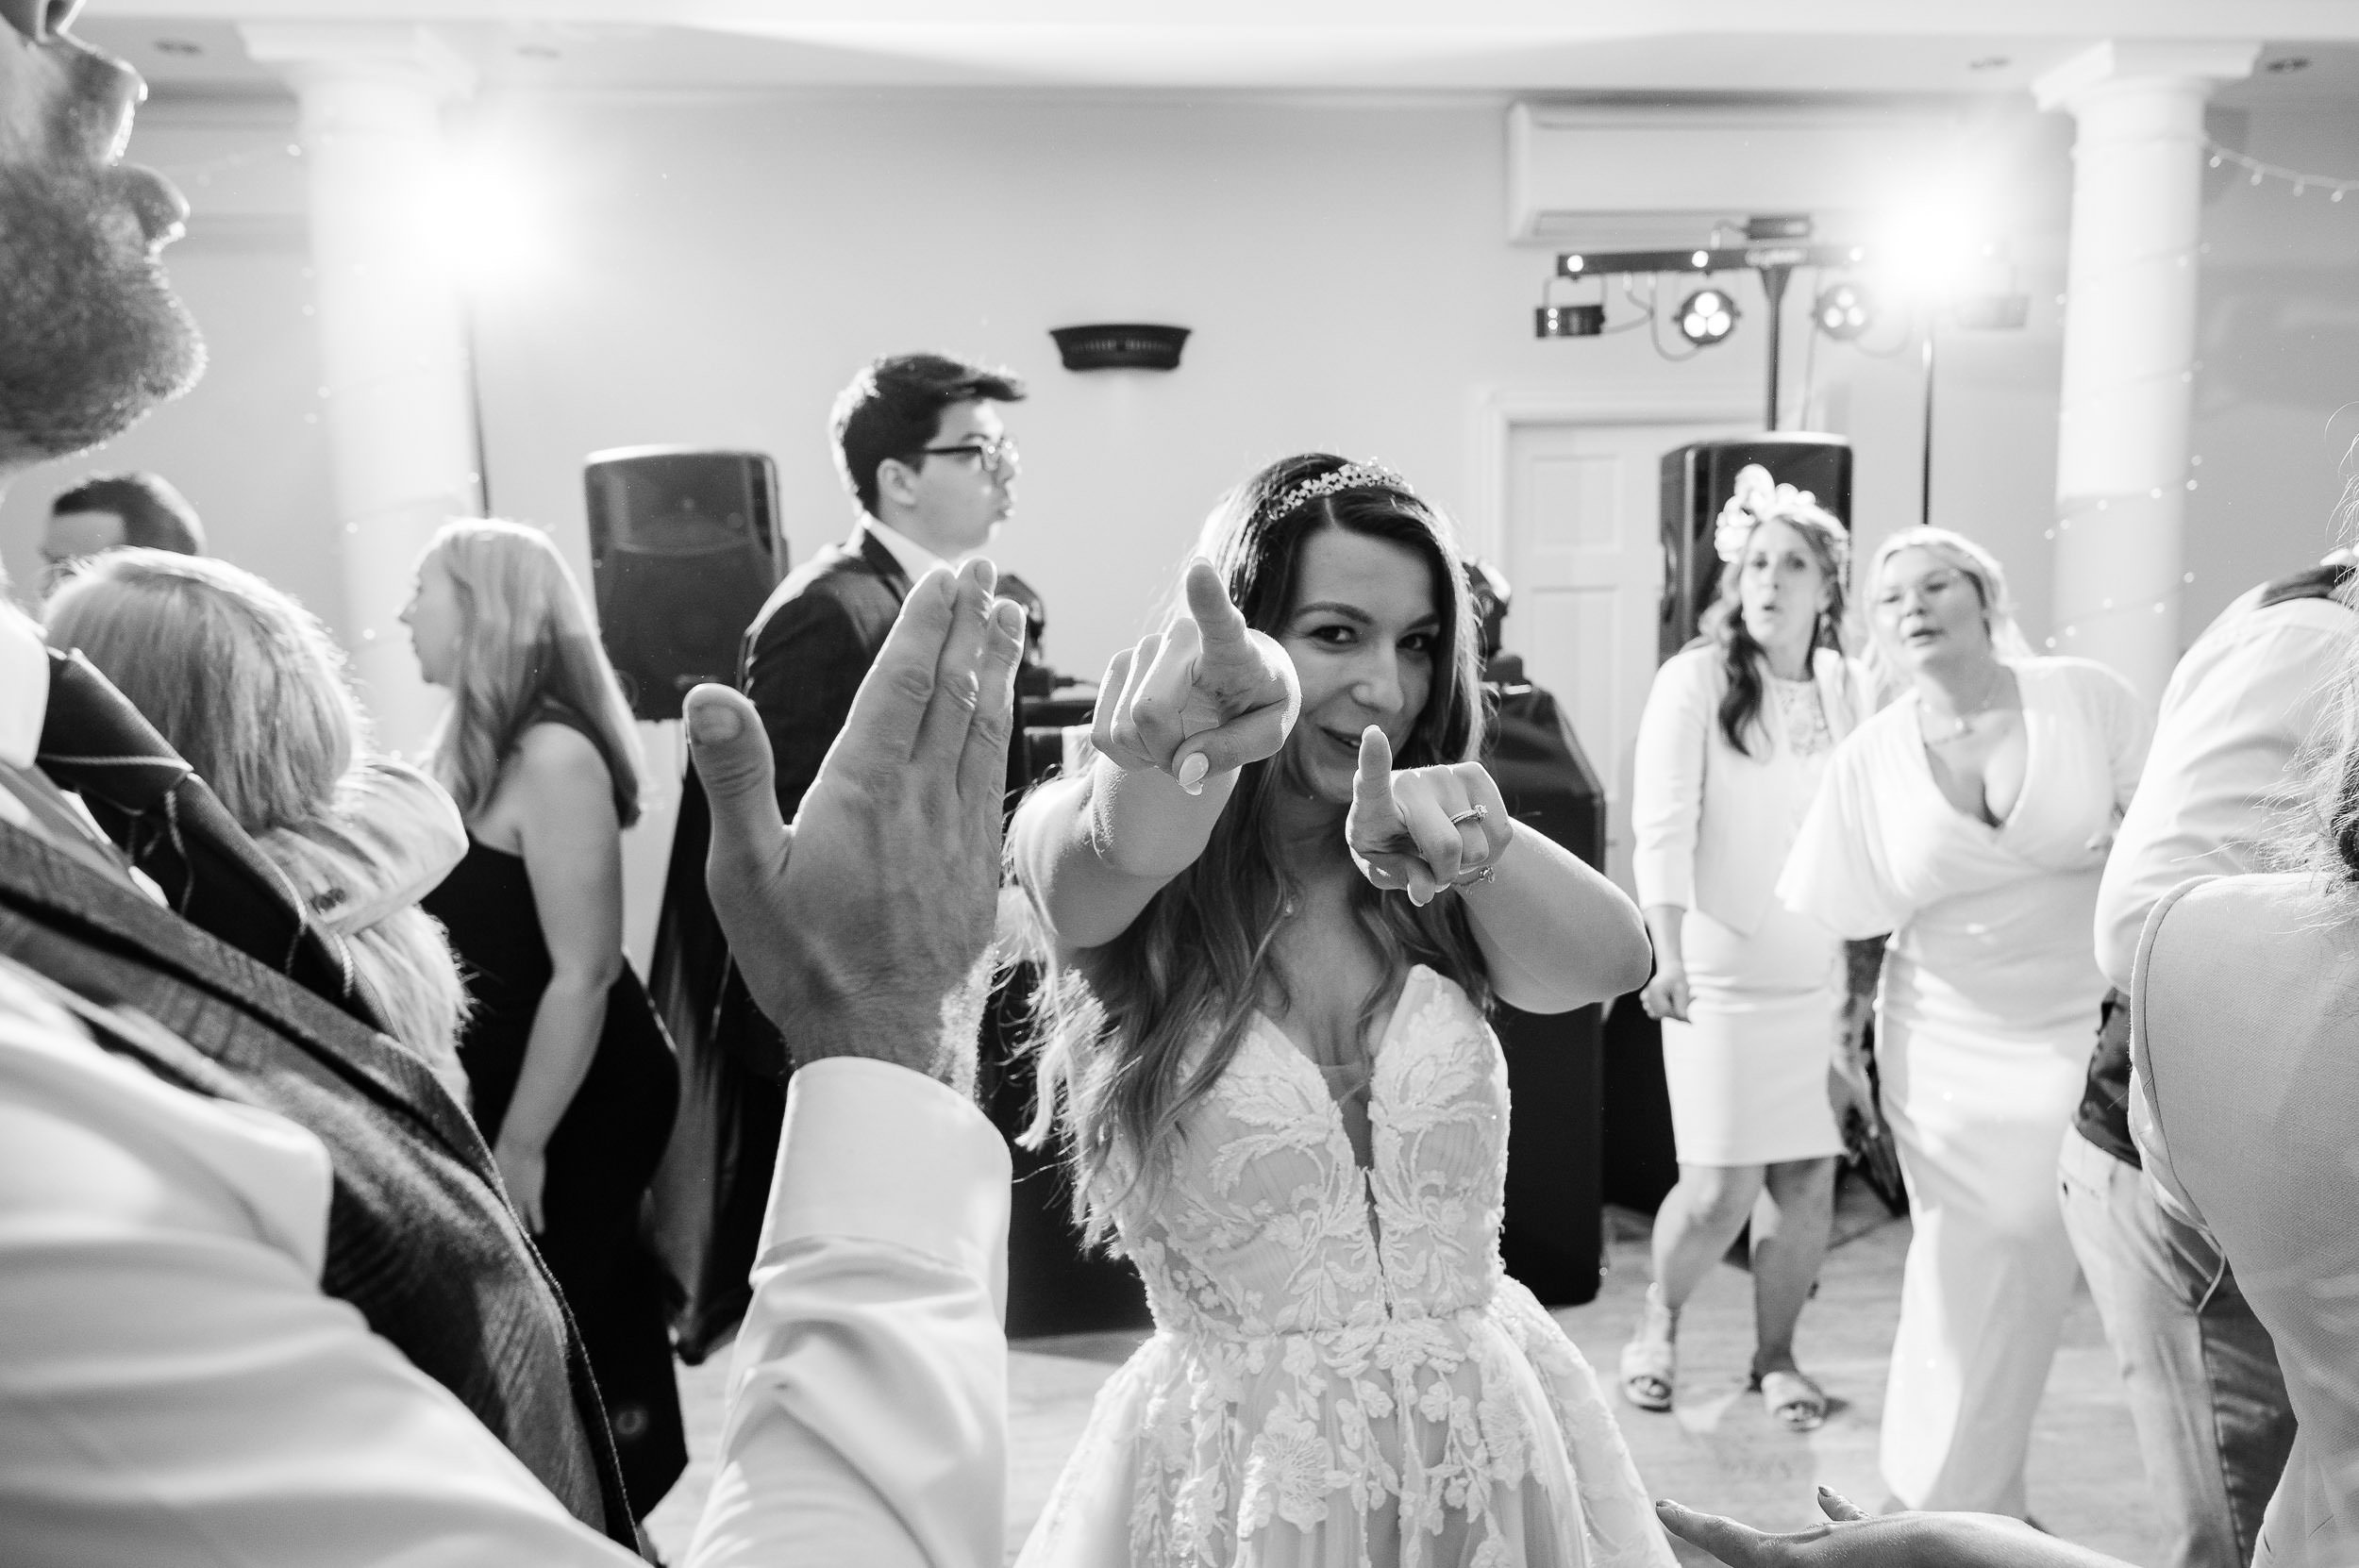 Bride throwing shapes on the dancefloor